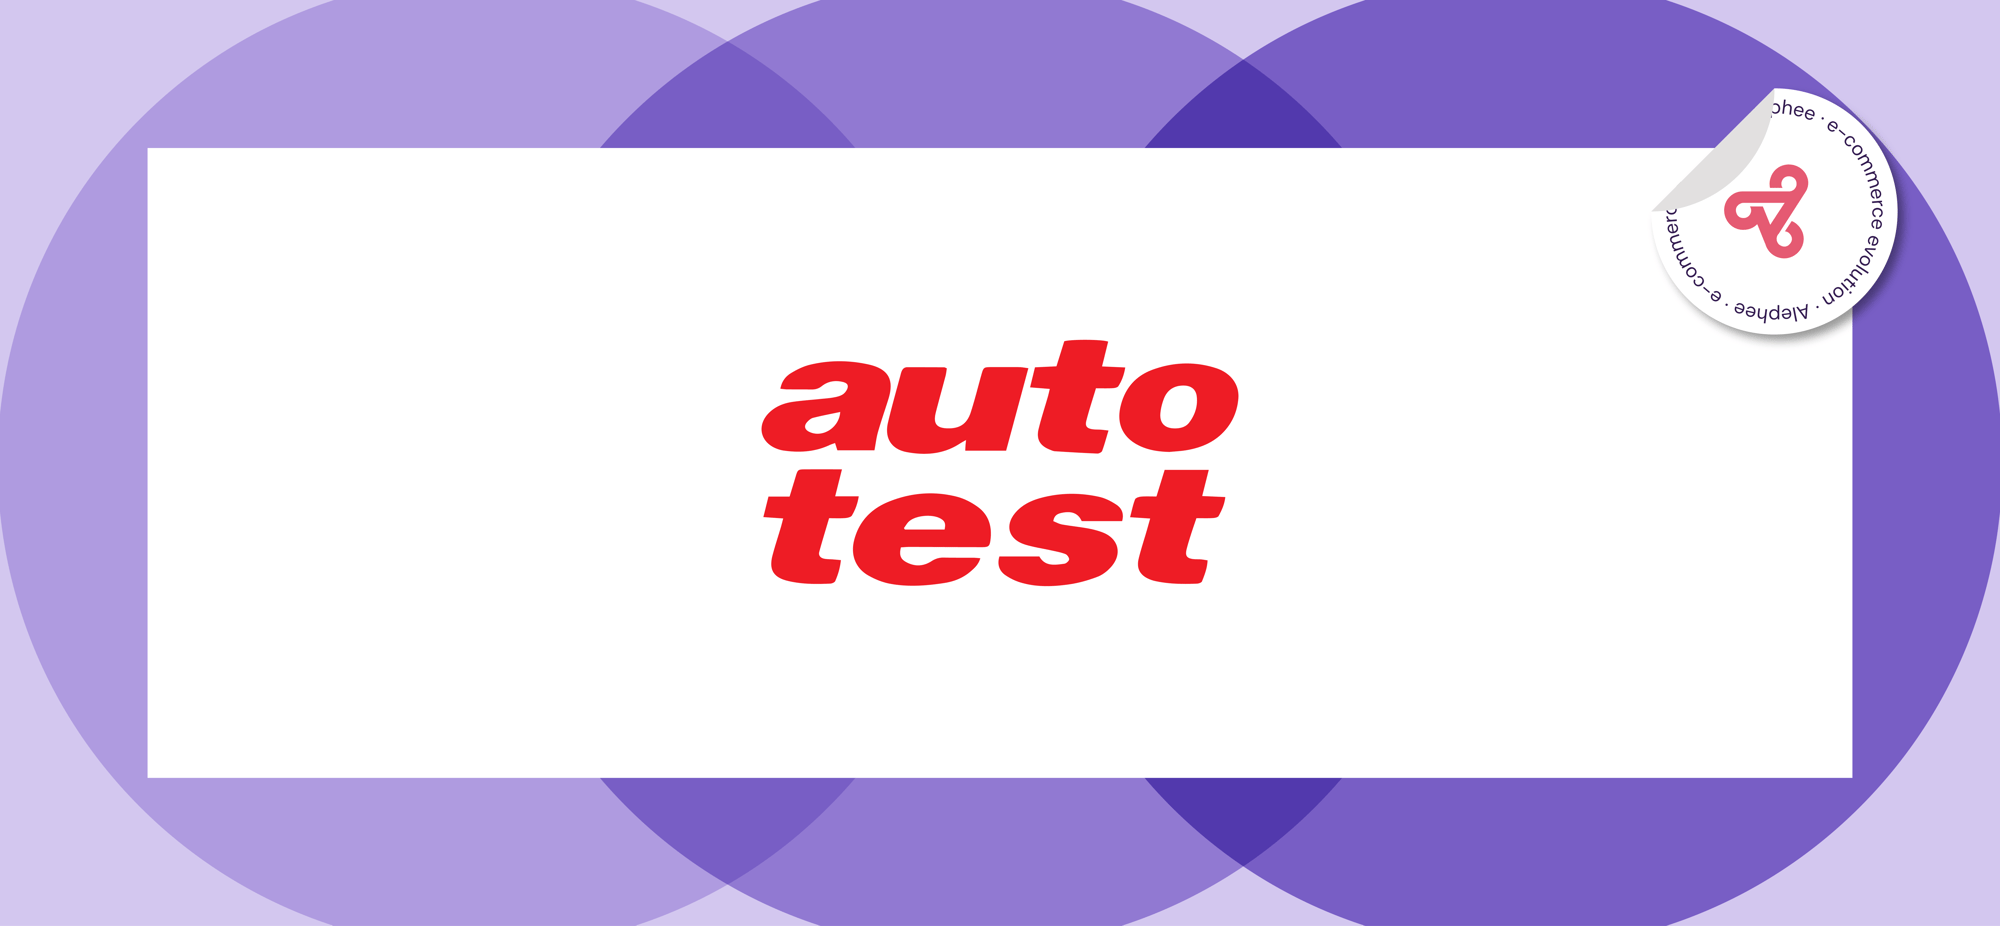 Página prensa_auto test